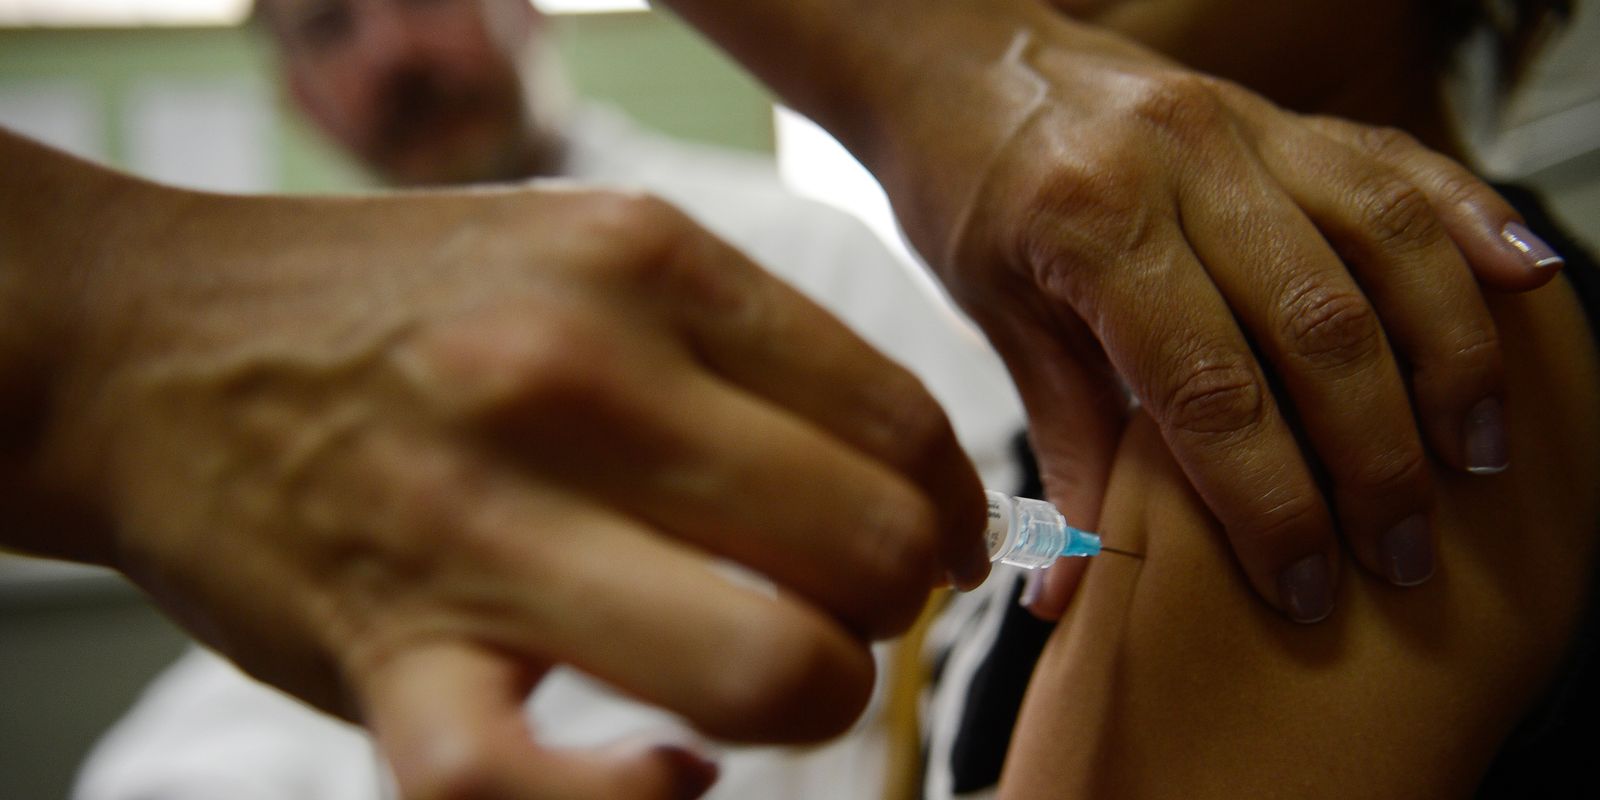 vacinacao:-escola-e-o-lugar-central-para-a-saude,-diz-ministra